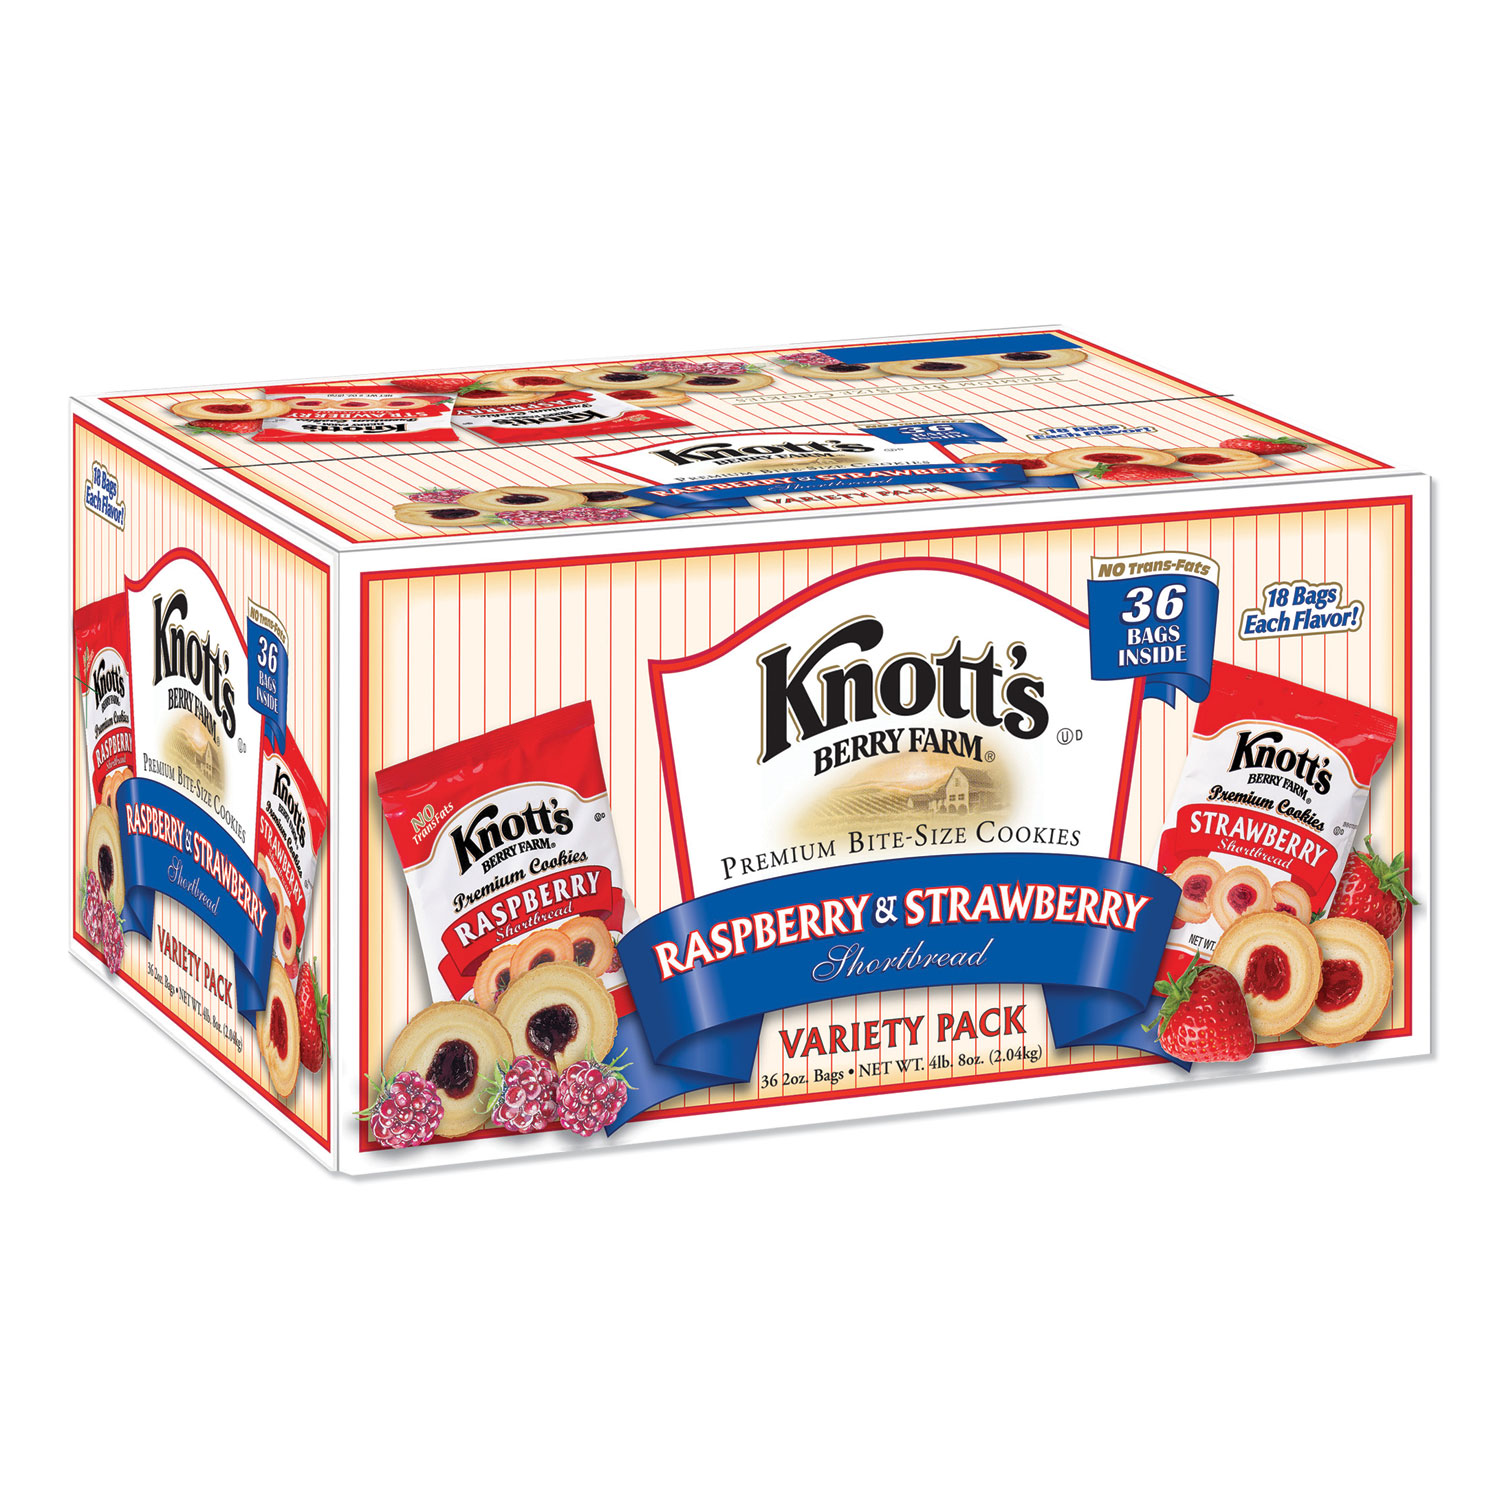  Knott's Berry Farm BIS59638 Premium Berry Jam Shortbread Cookies, Raspberry and Strawberry Variety, 2 oz Pack, 36 Packs/Carton (KNO24355380) 